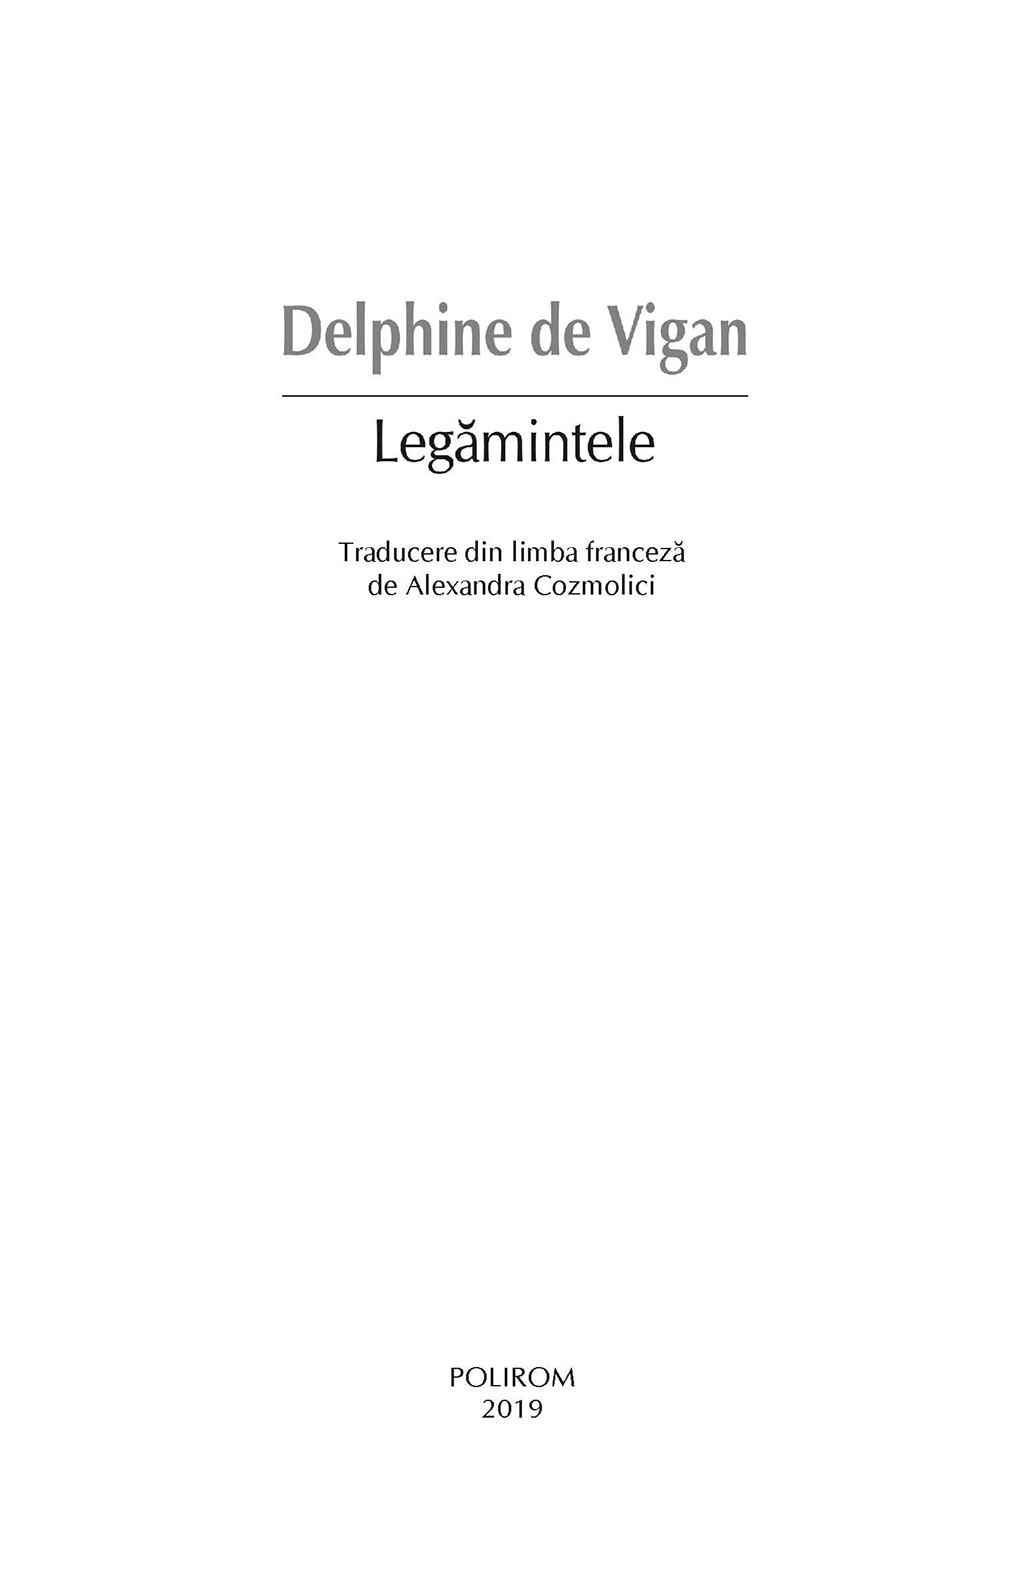 Legamintele | Delphine de Vigan - 7